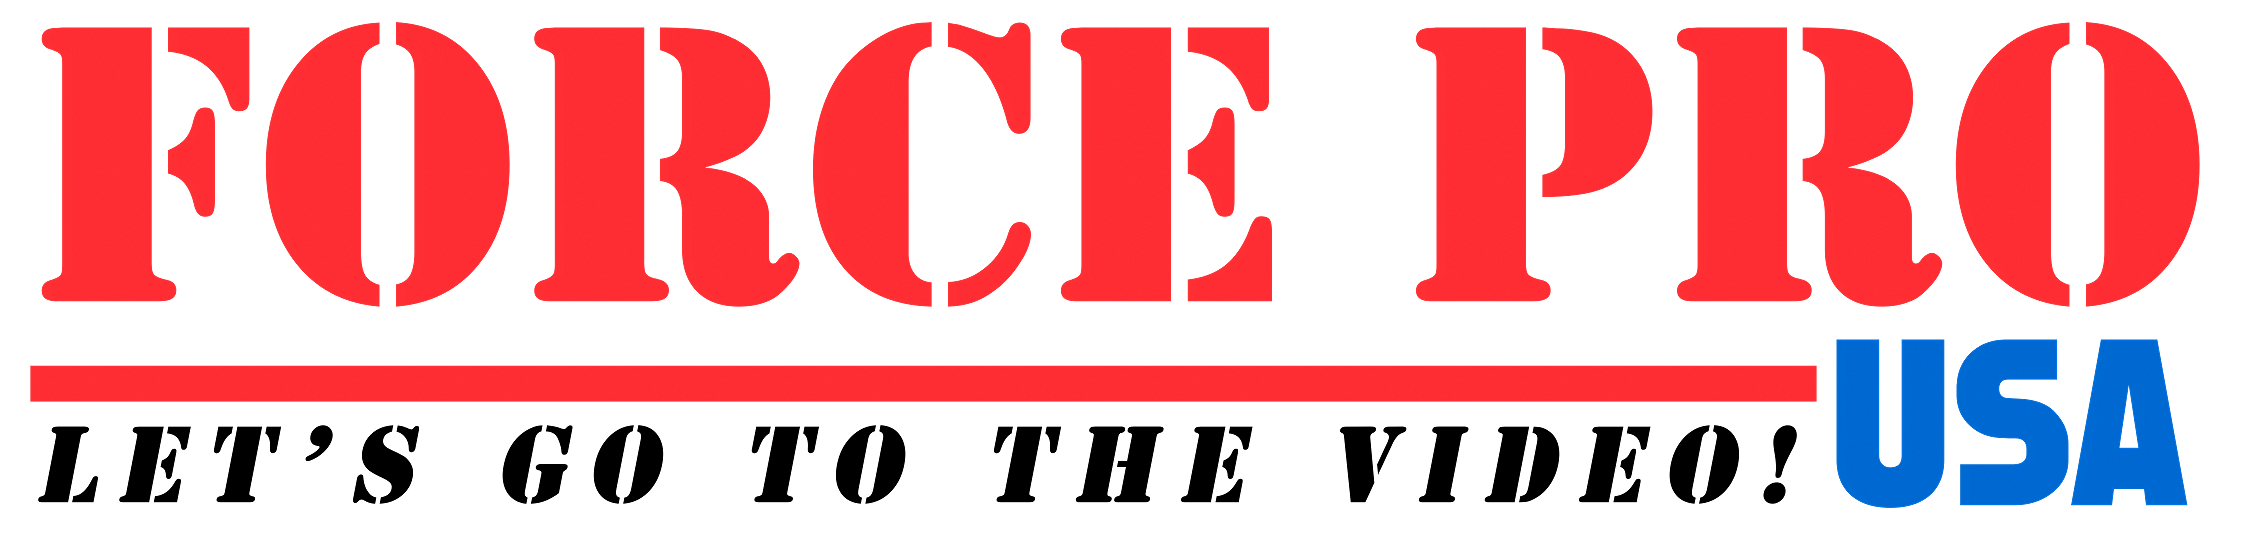 forceprovideo logo